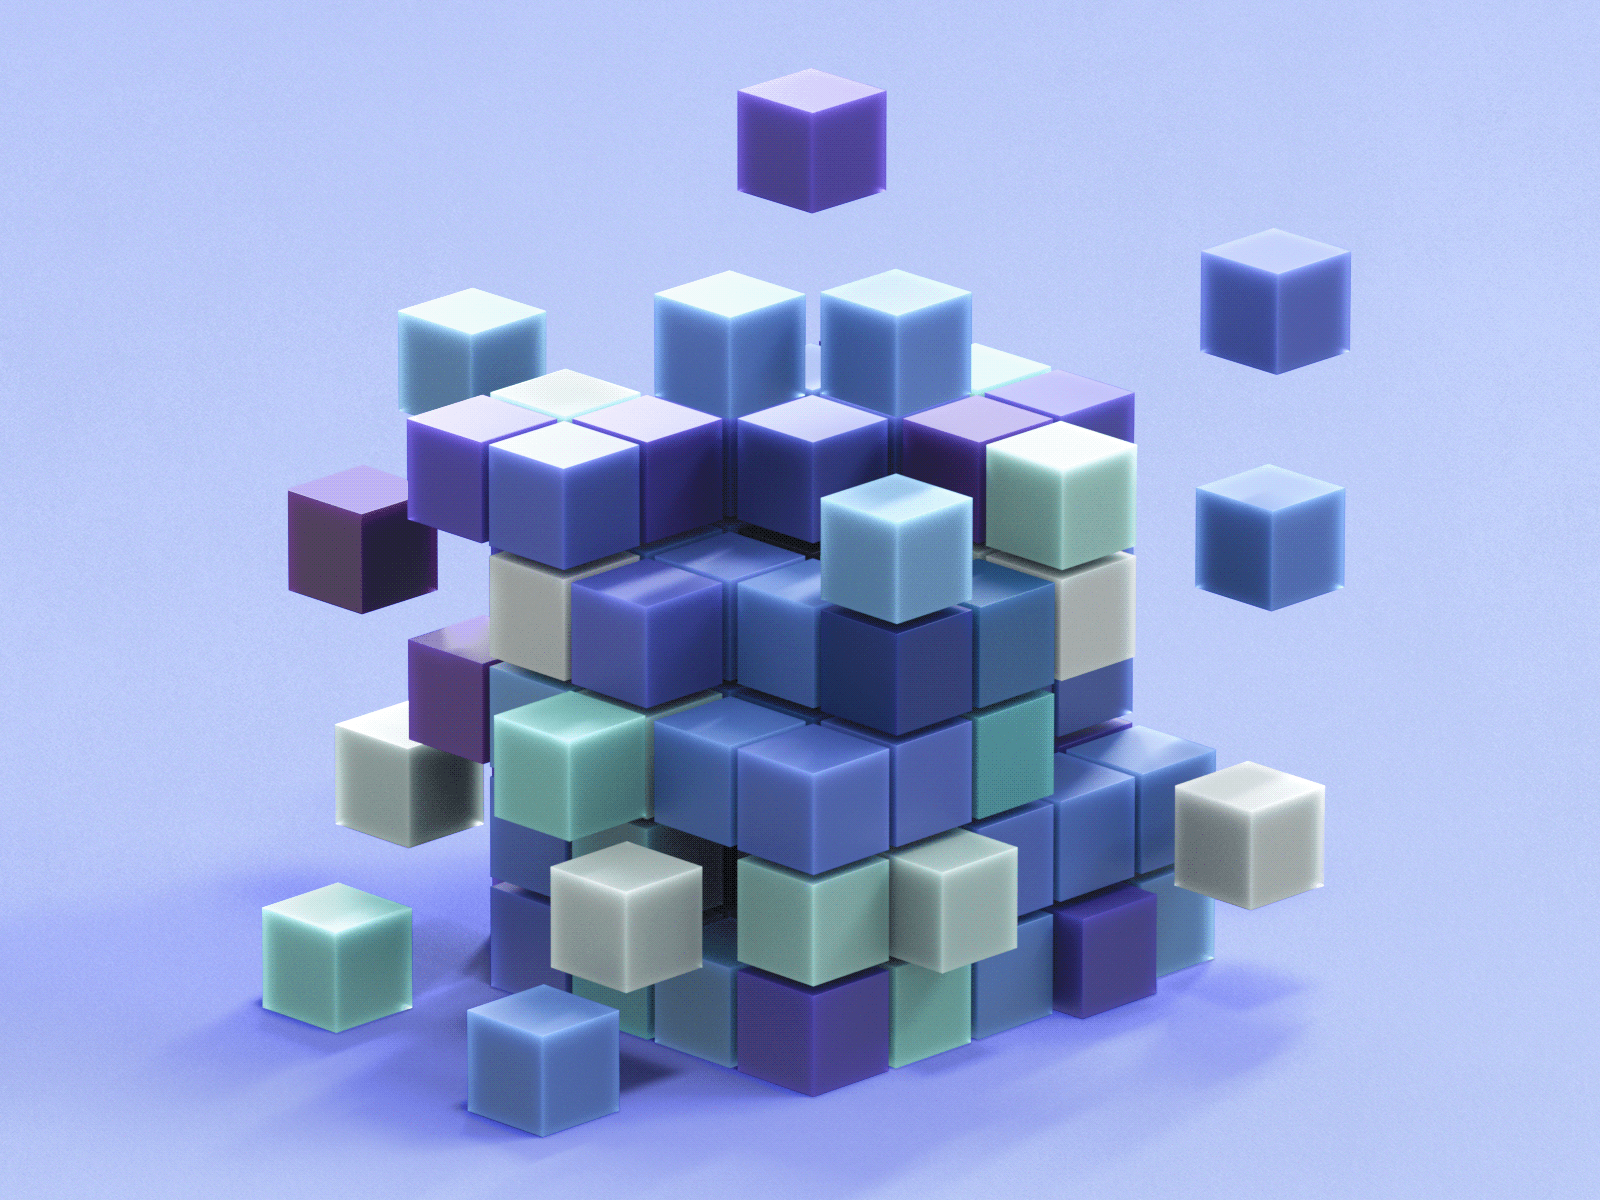 
Cube Network